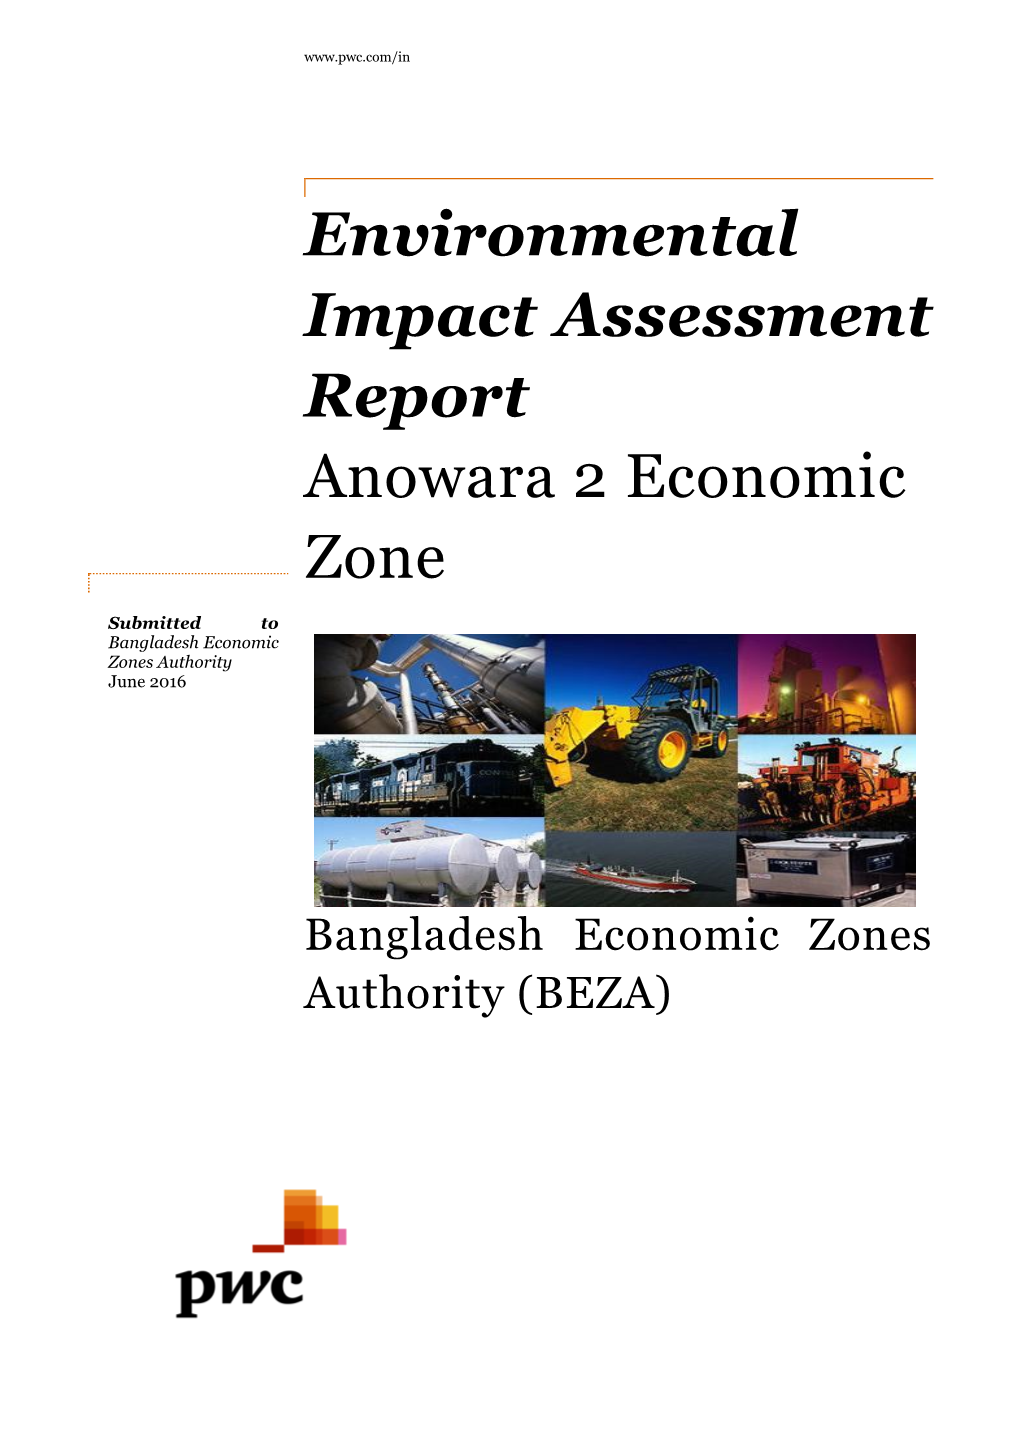 Environmental Impact Assessment Report Anowara 2 Economic Zone